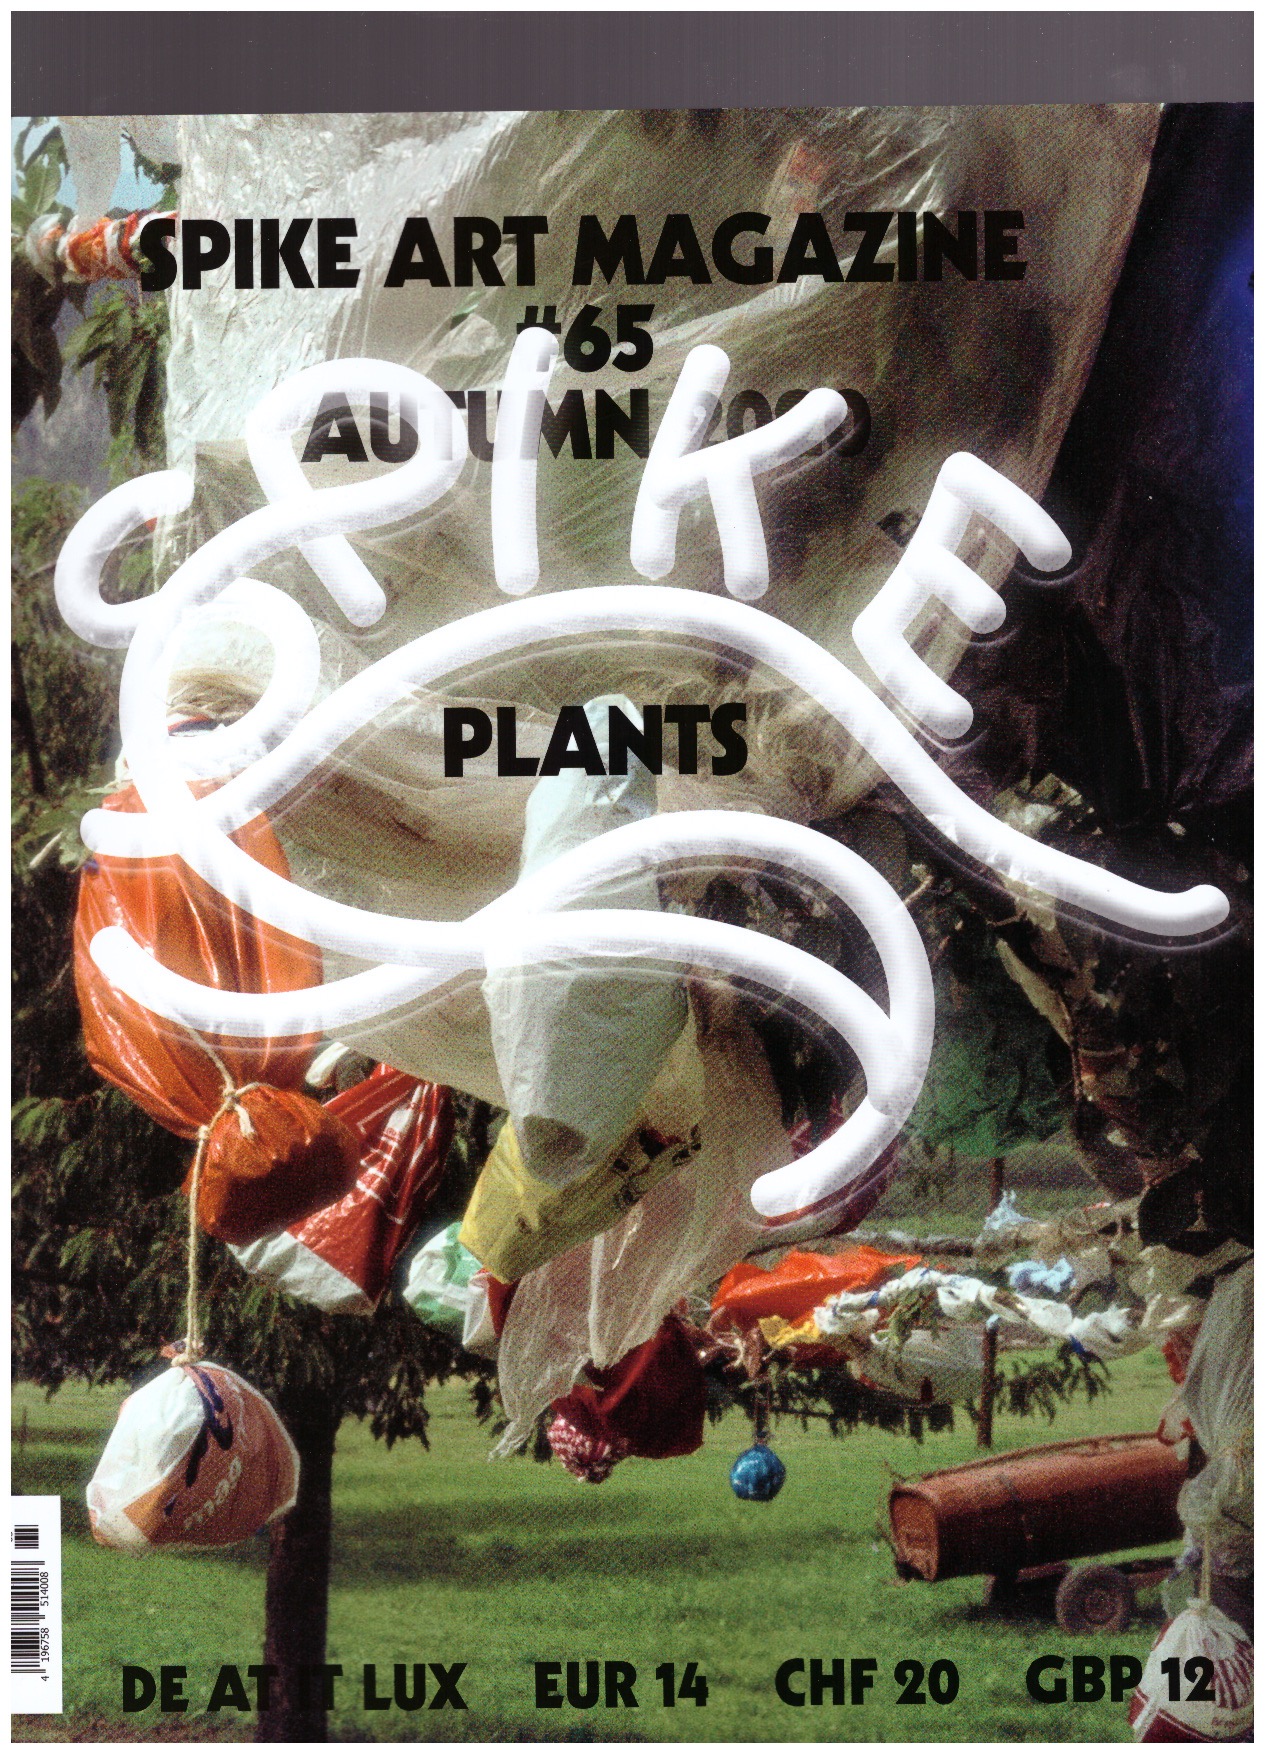 VITORELLI, Rita (ed.) - Spike Art Quarterly #65 Autumn 2020